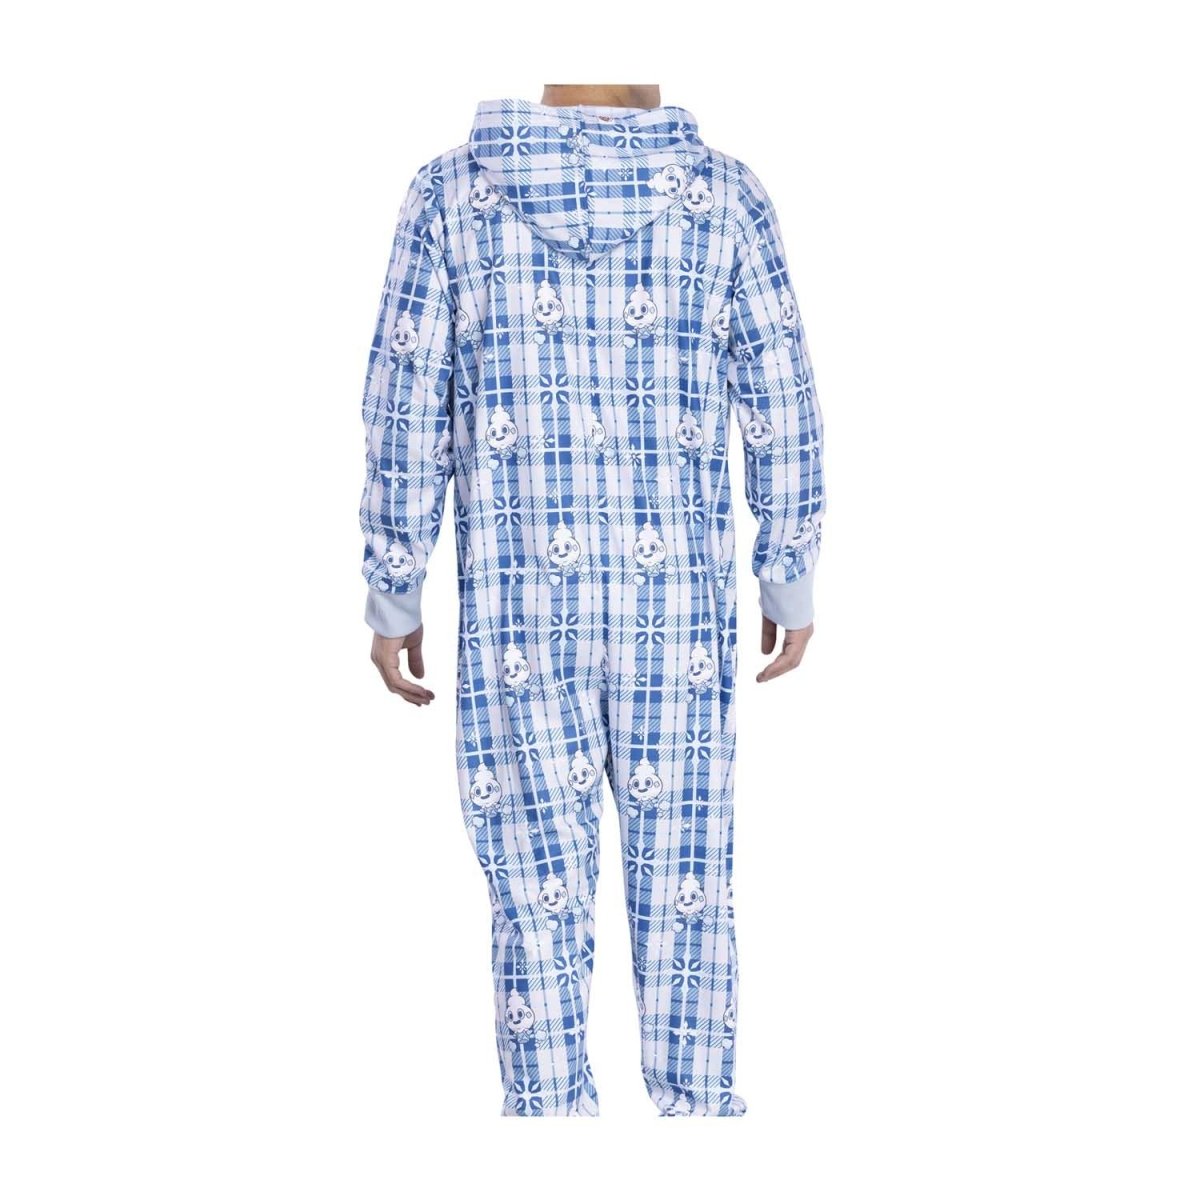 Vanillite Hooded One-Piece Pajamas - Adult